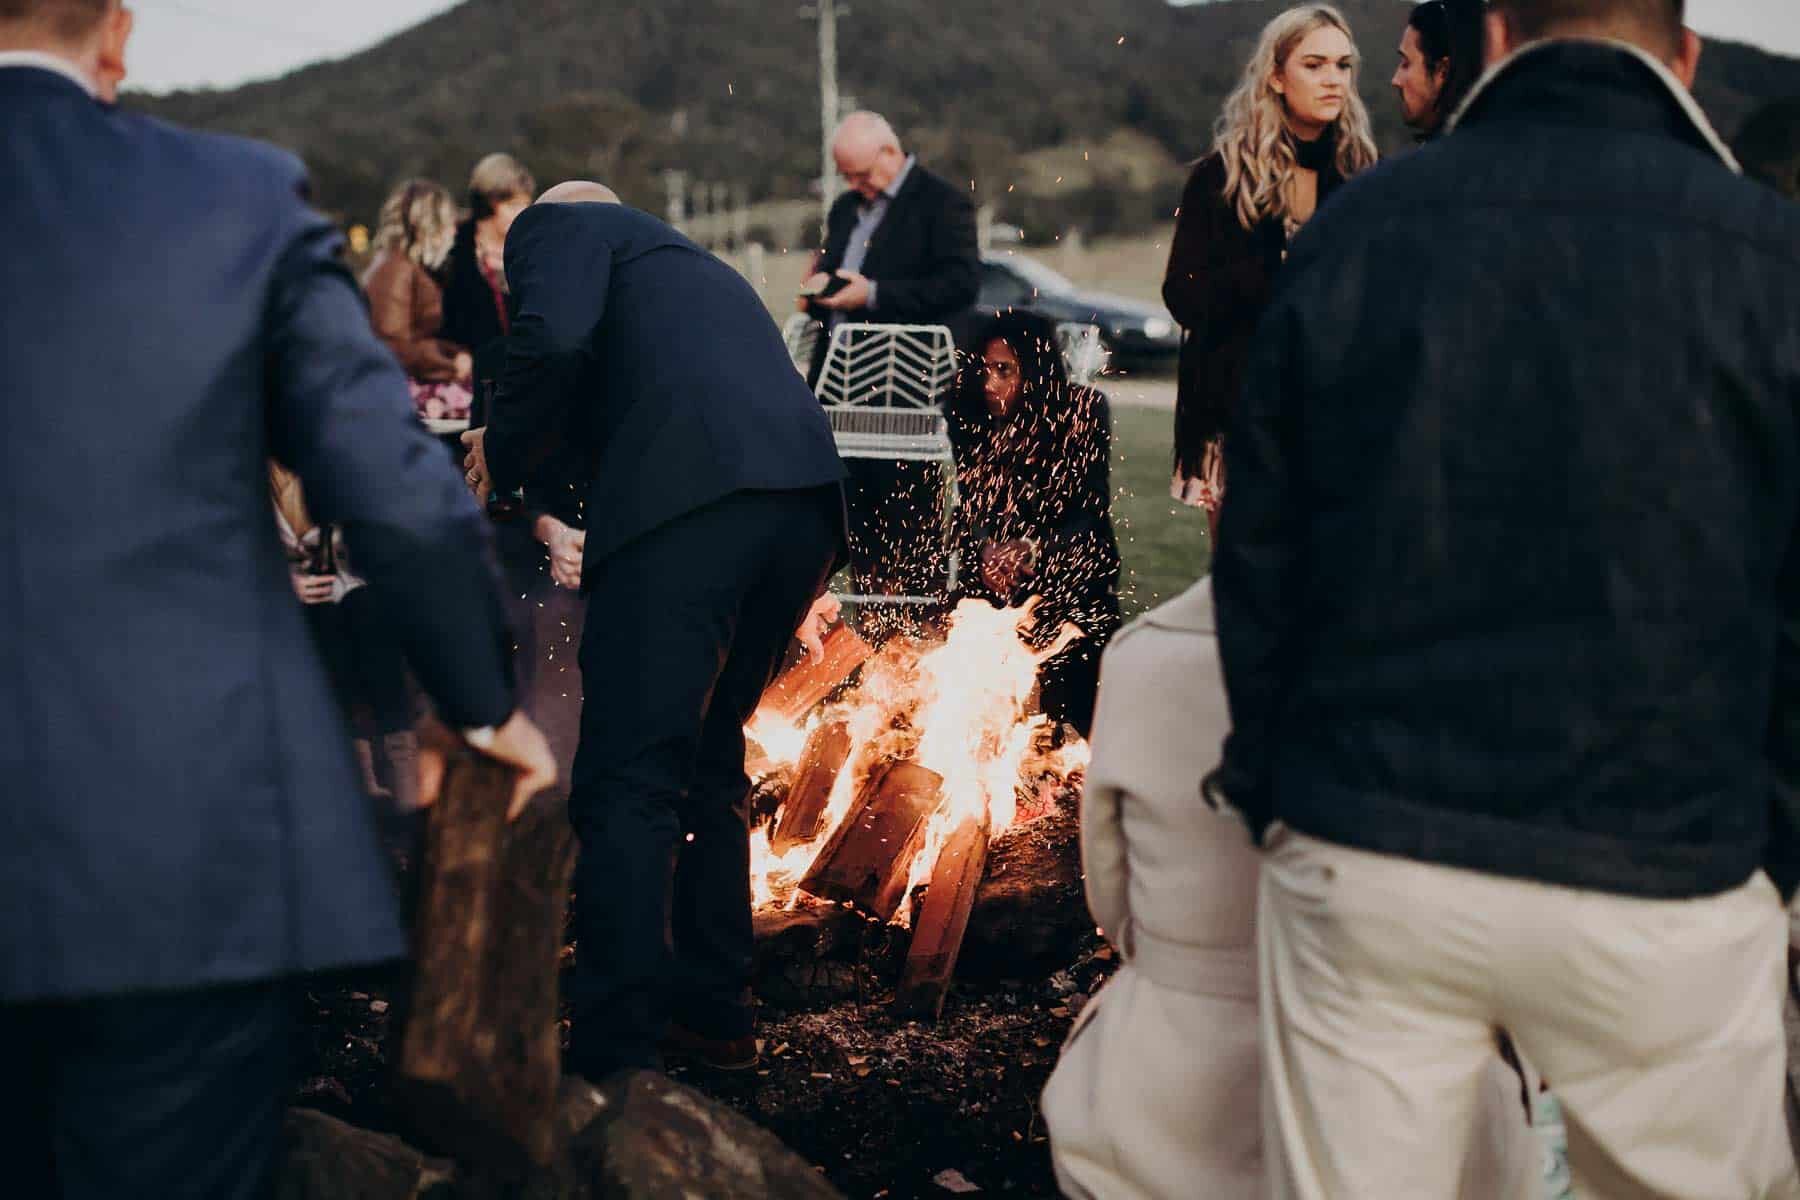 rutic outdoor wedding with bonfire